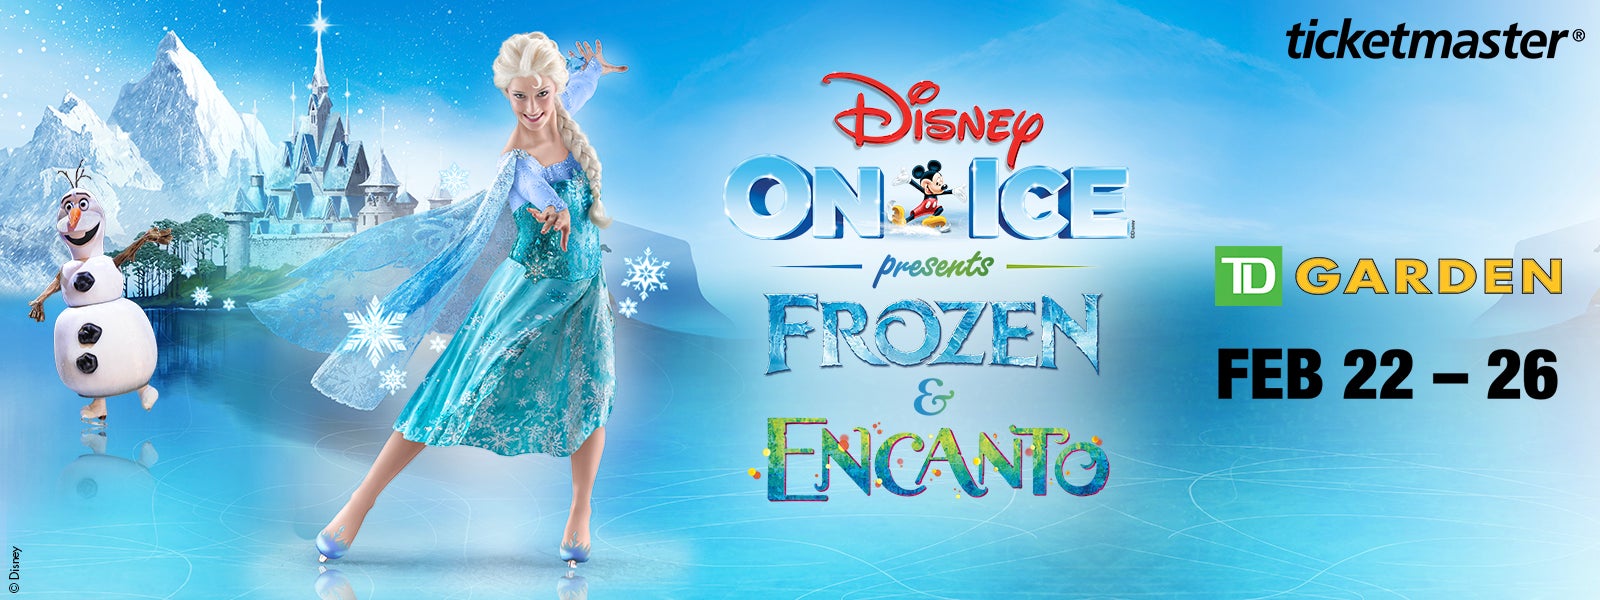 Disney on Ice presents Frozen and Encanto TD Garden